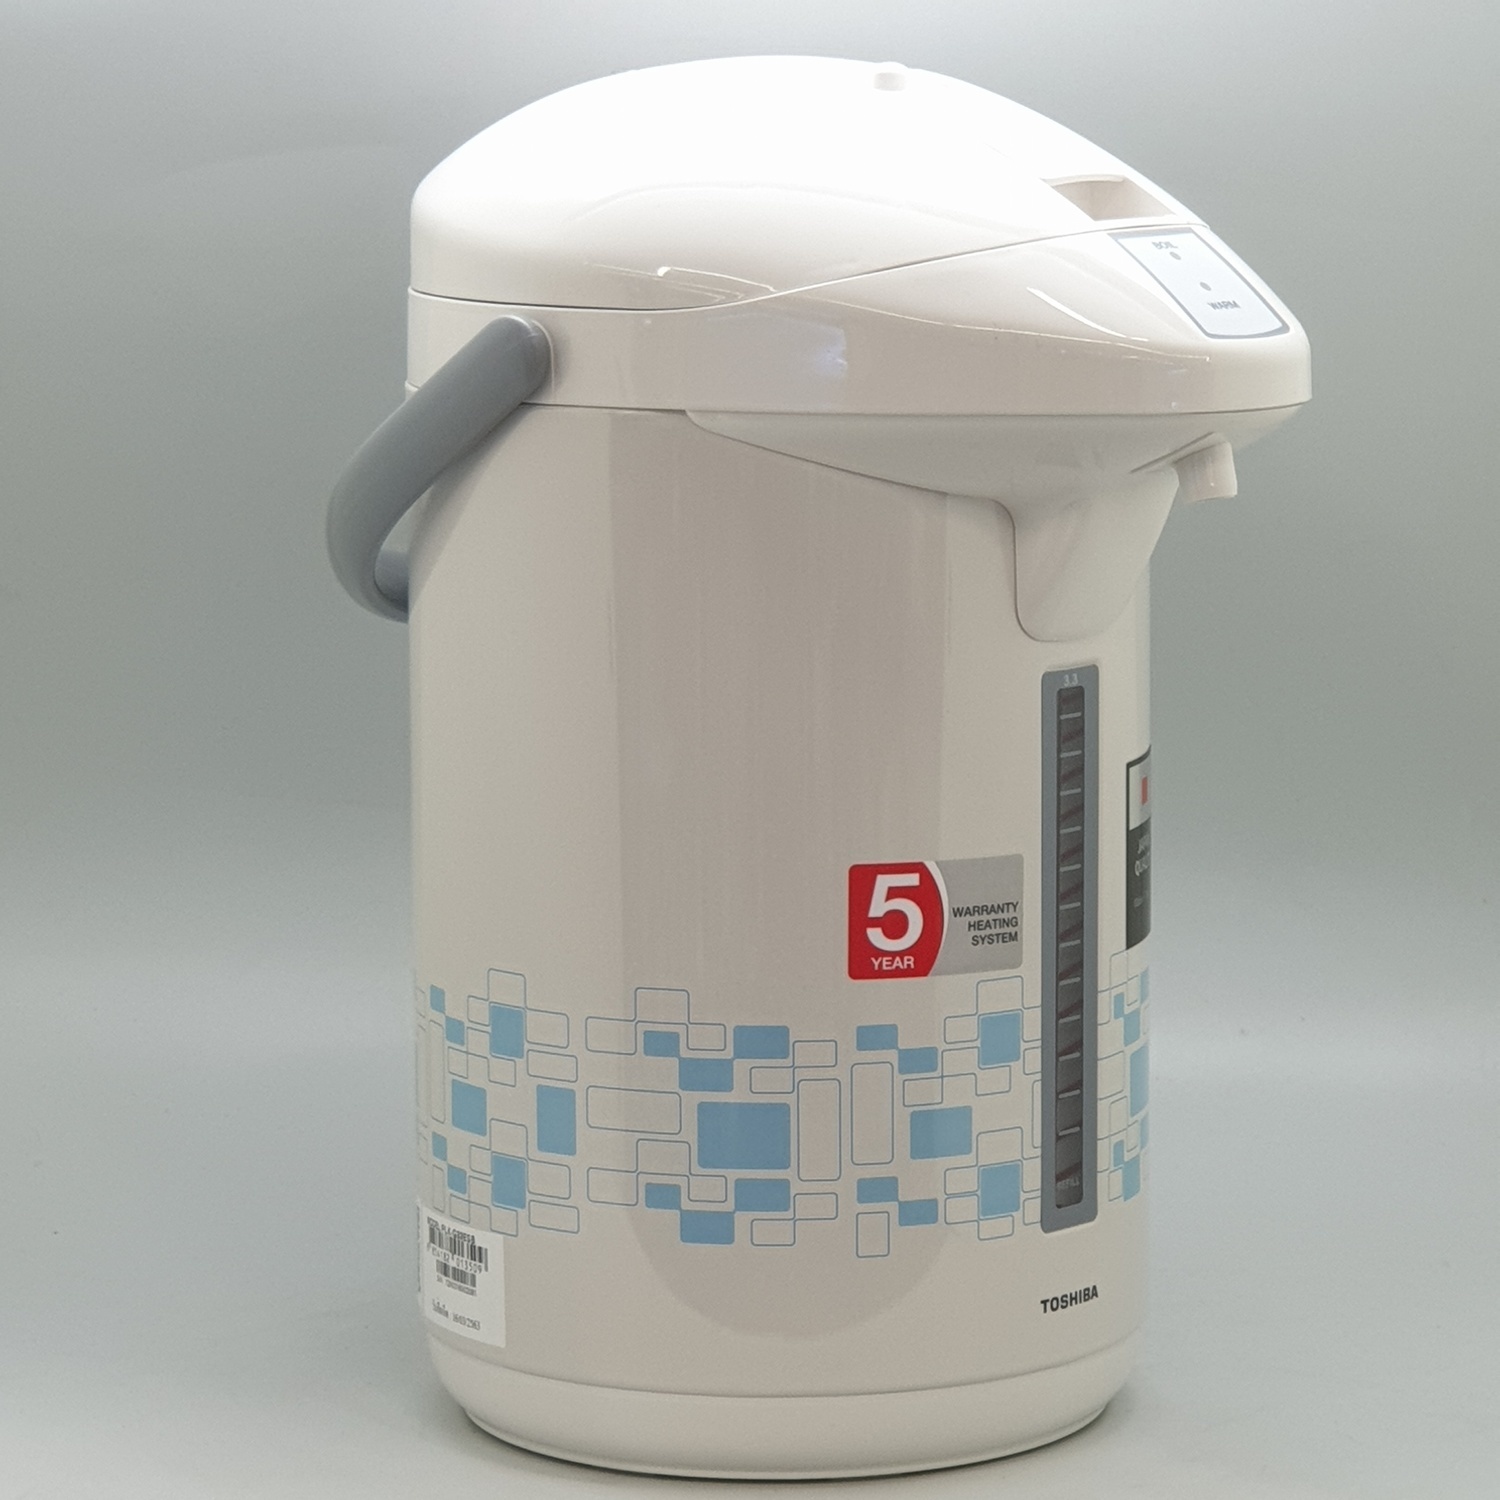 TOSHIBA กระติกน้ำร้อน 3.3 ลิตร PLK-G33ESB สีฟ้า